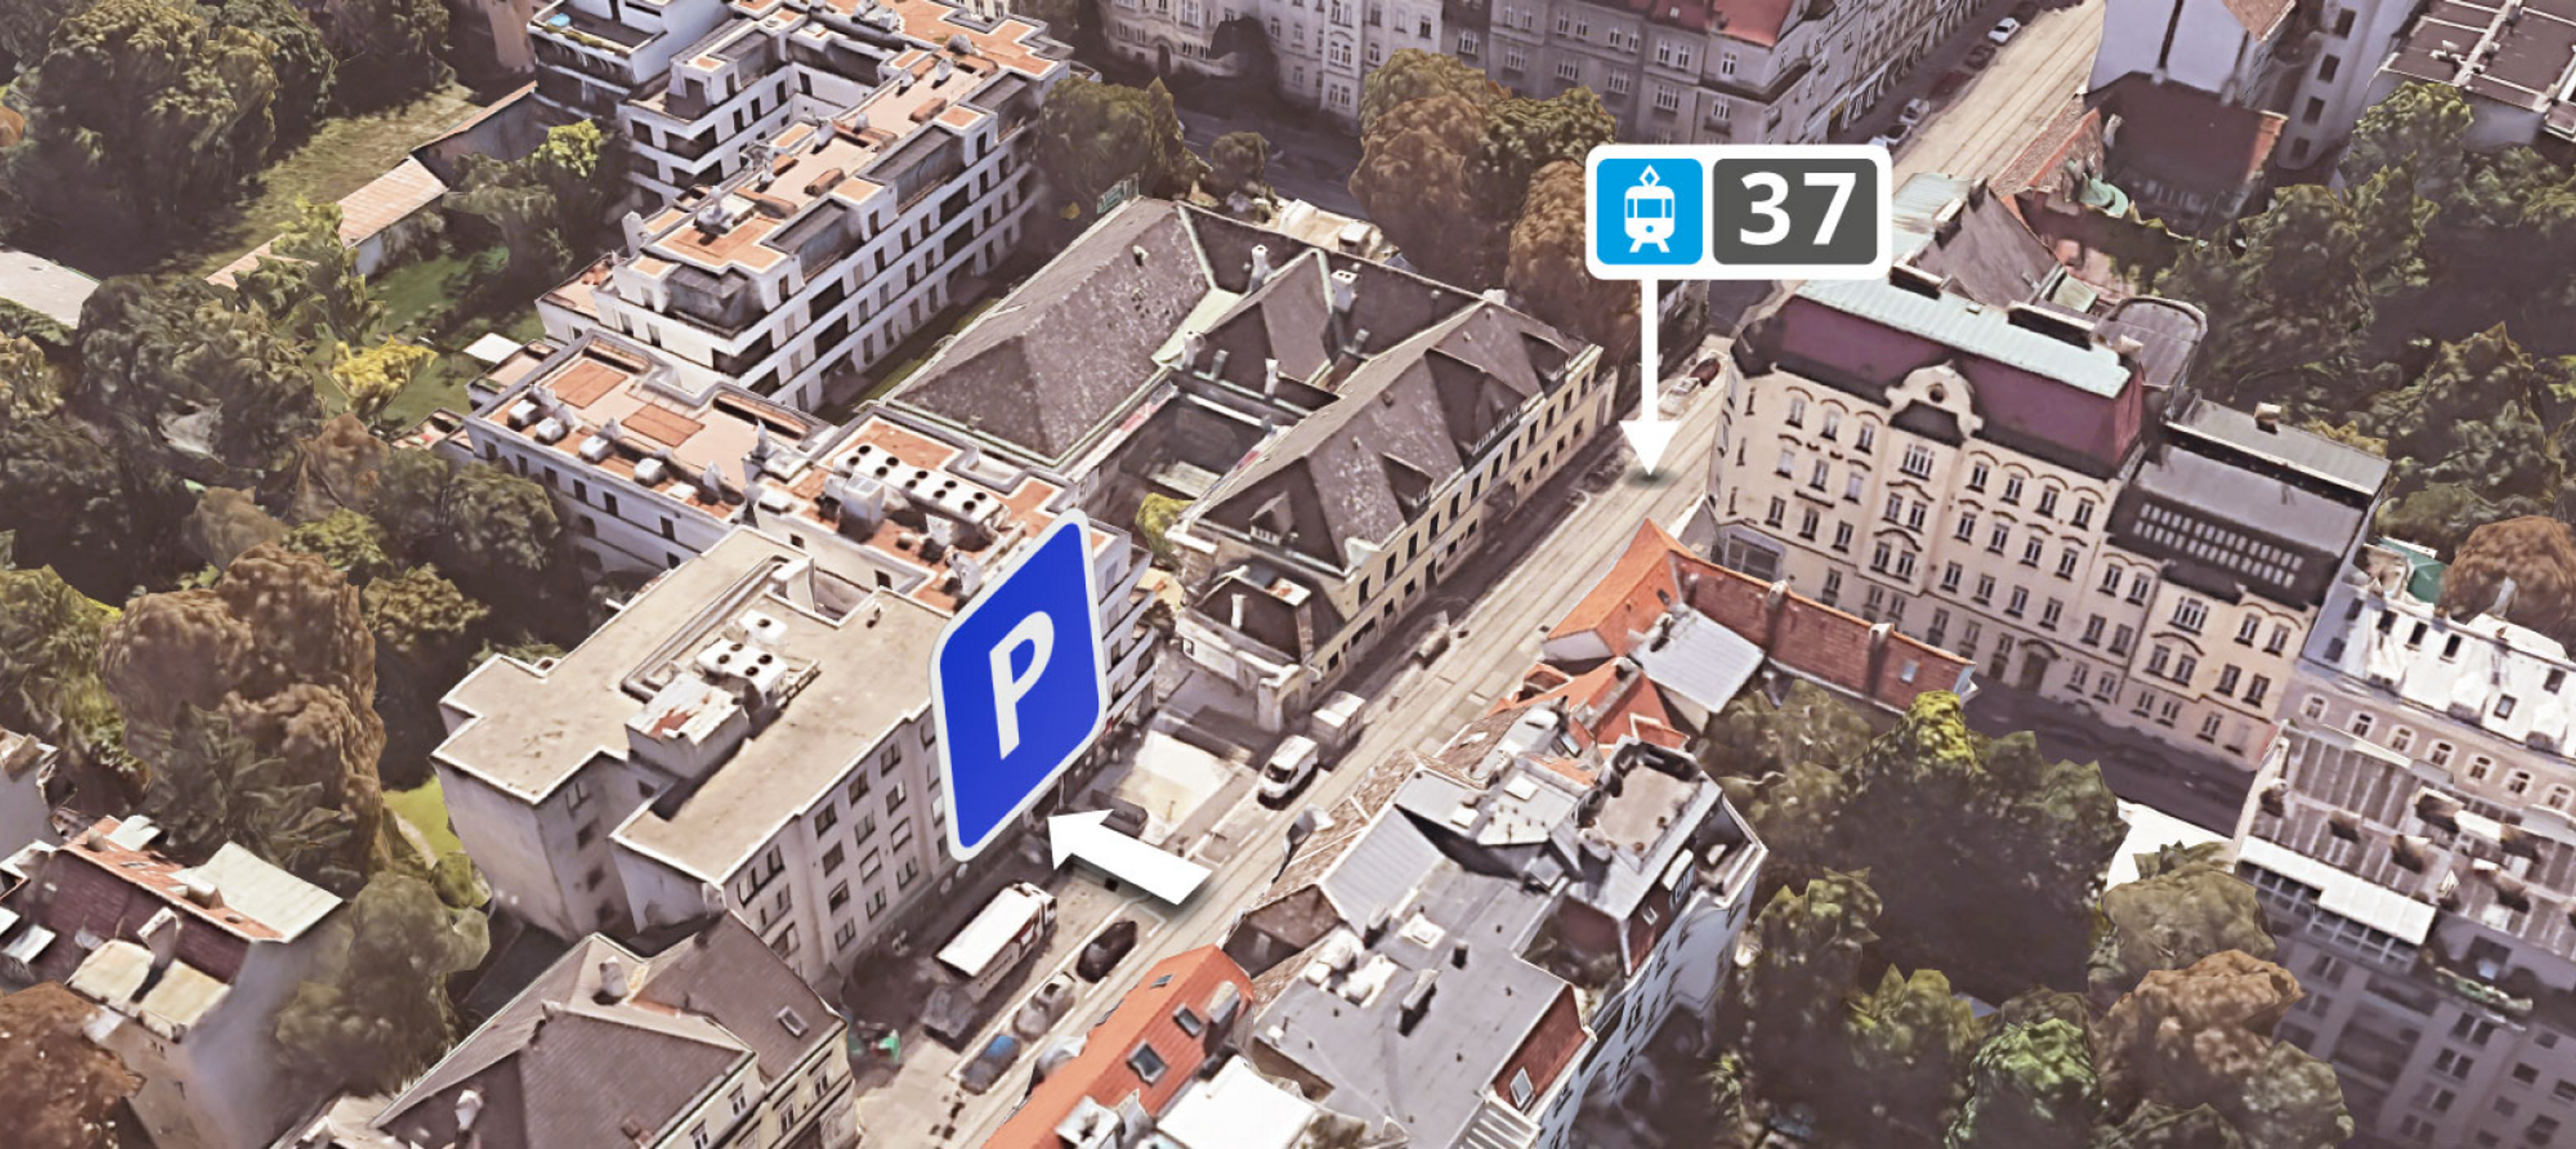 Location plan for Casino Zögernitz